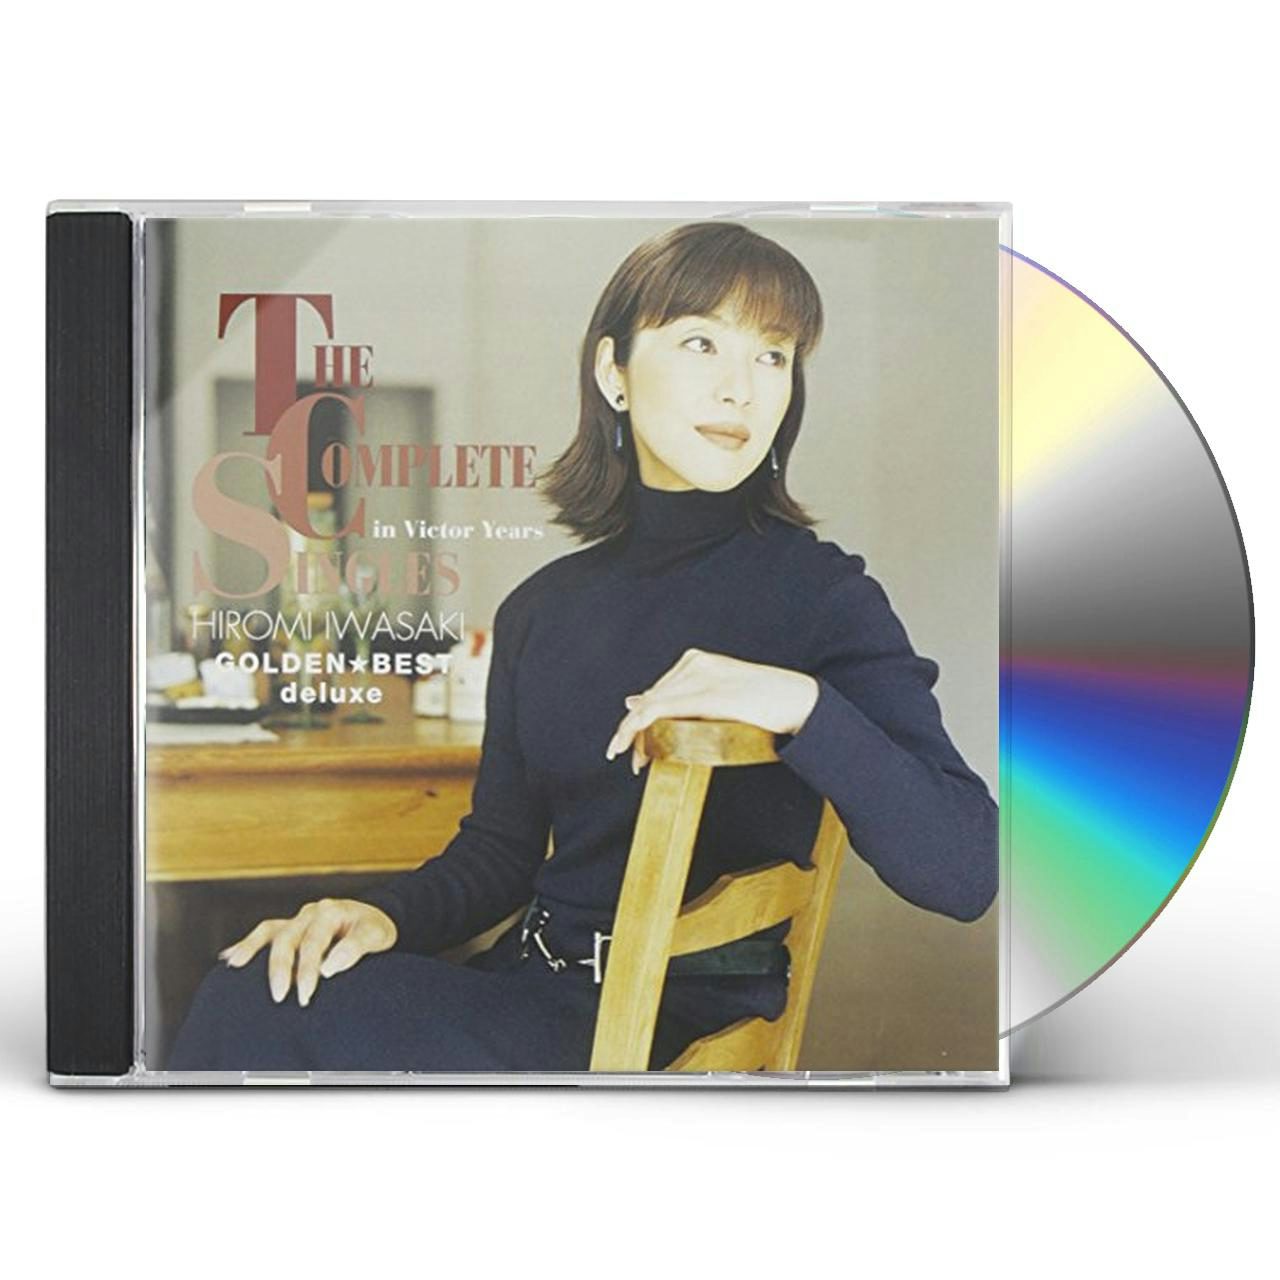 Hiromi Iwasaki LIVE 96 FULL CIRCLE CD